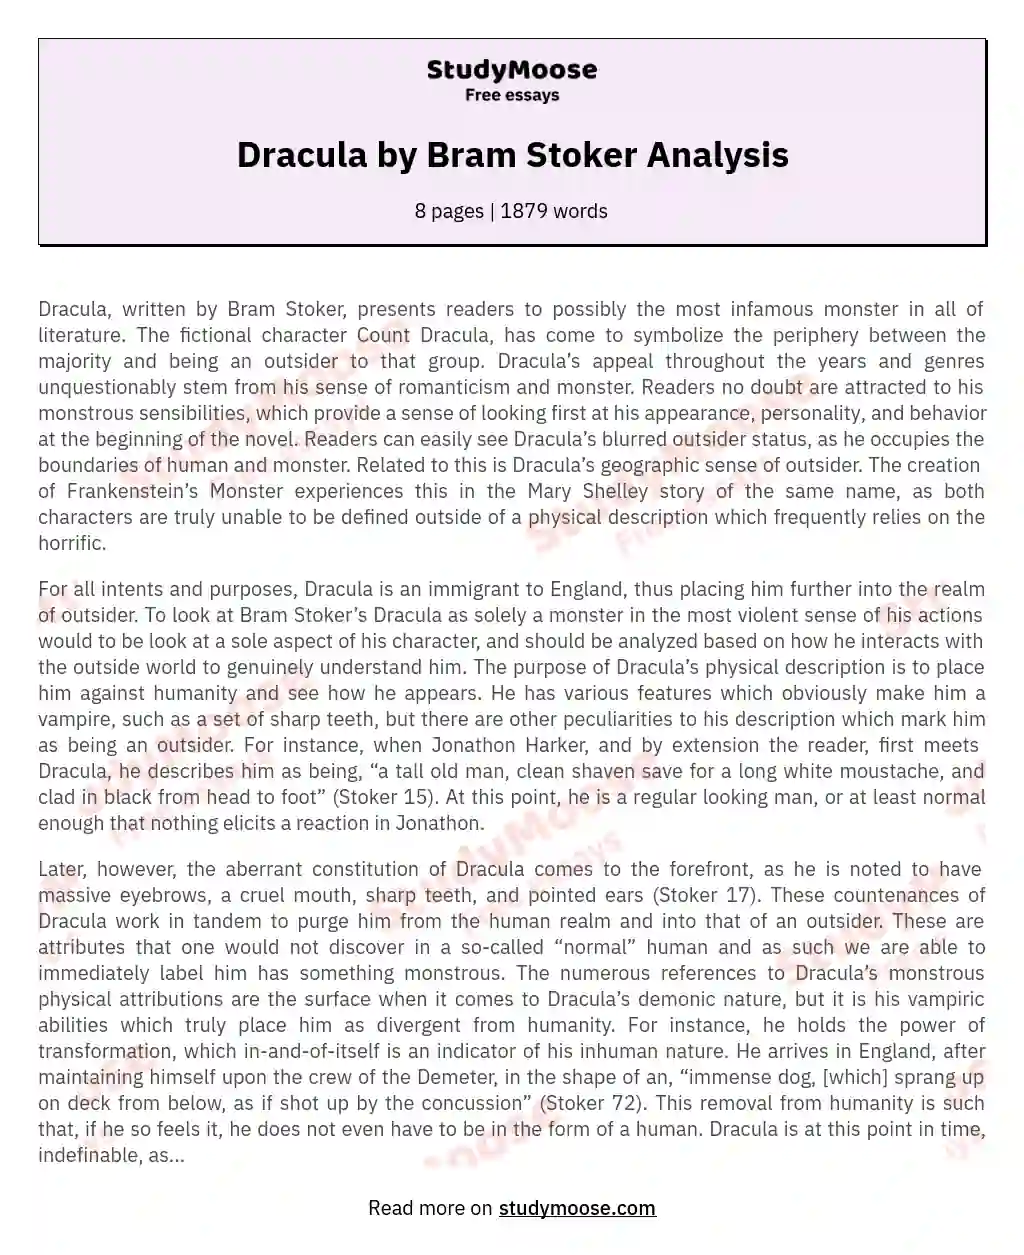 Dracula by Bram Stoker Analysis